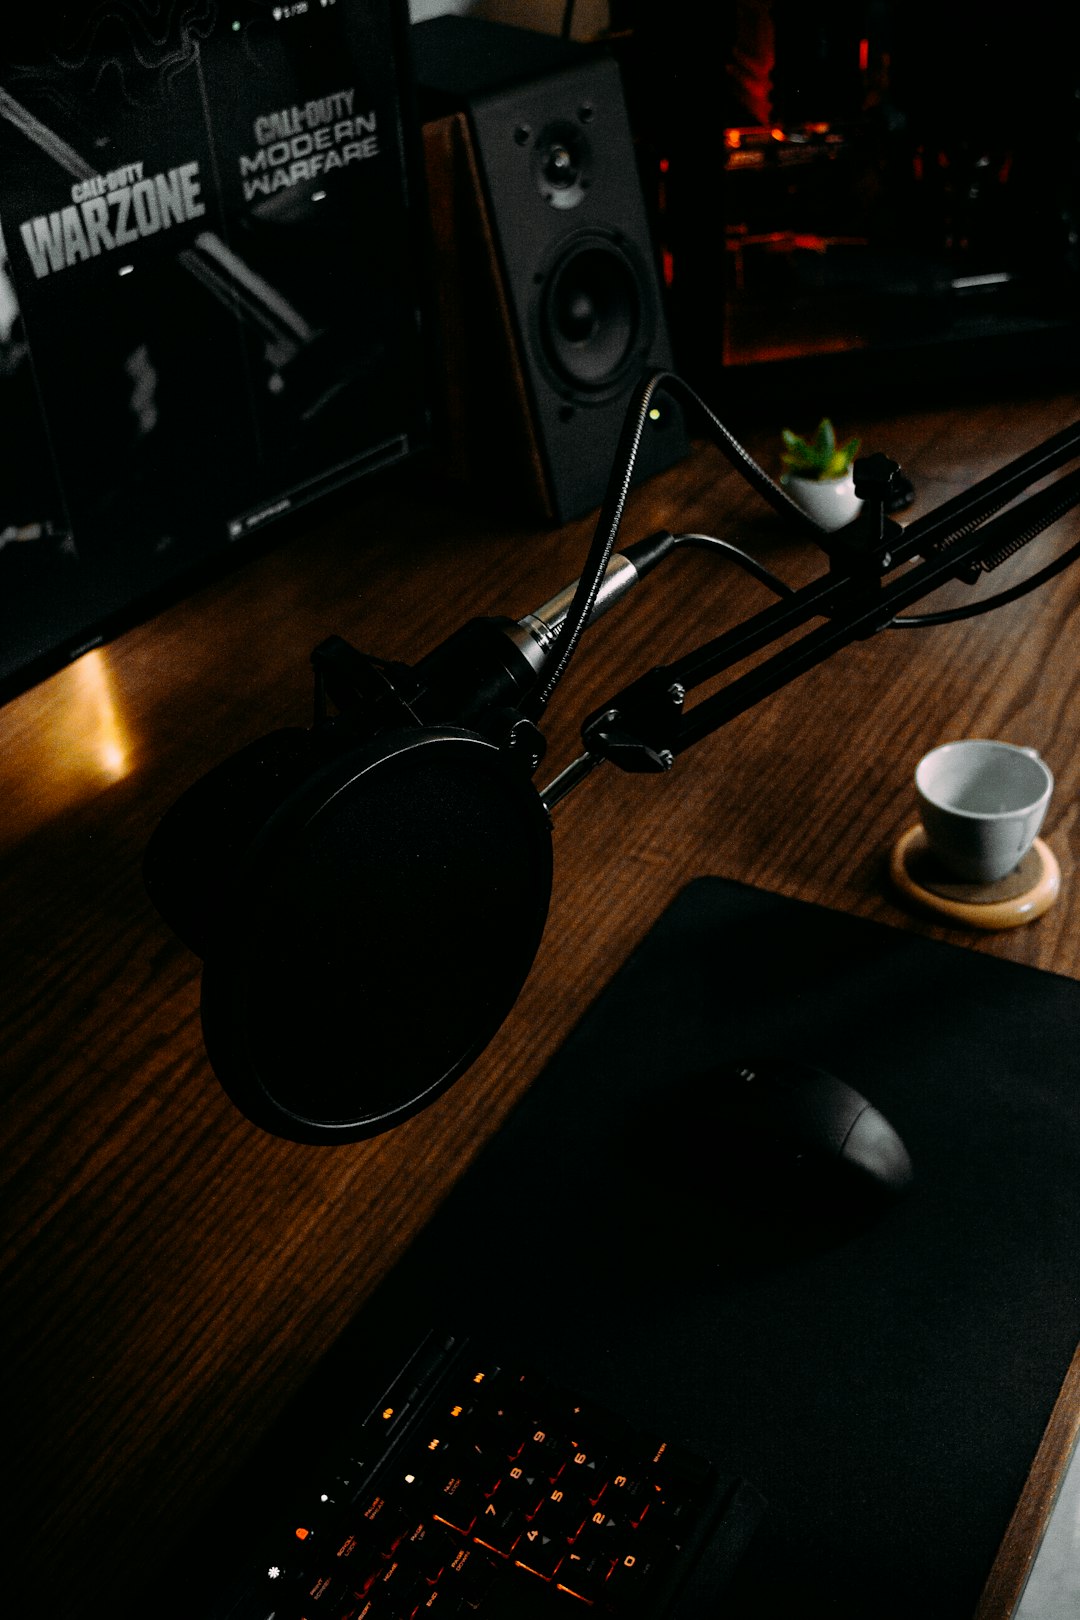 black corded headphones on brown wooden table